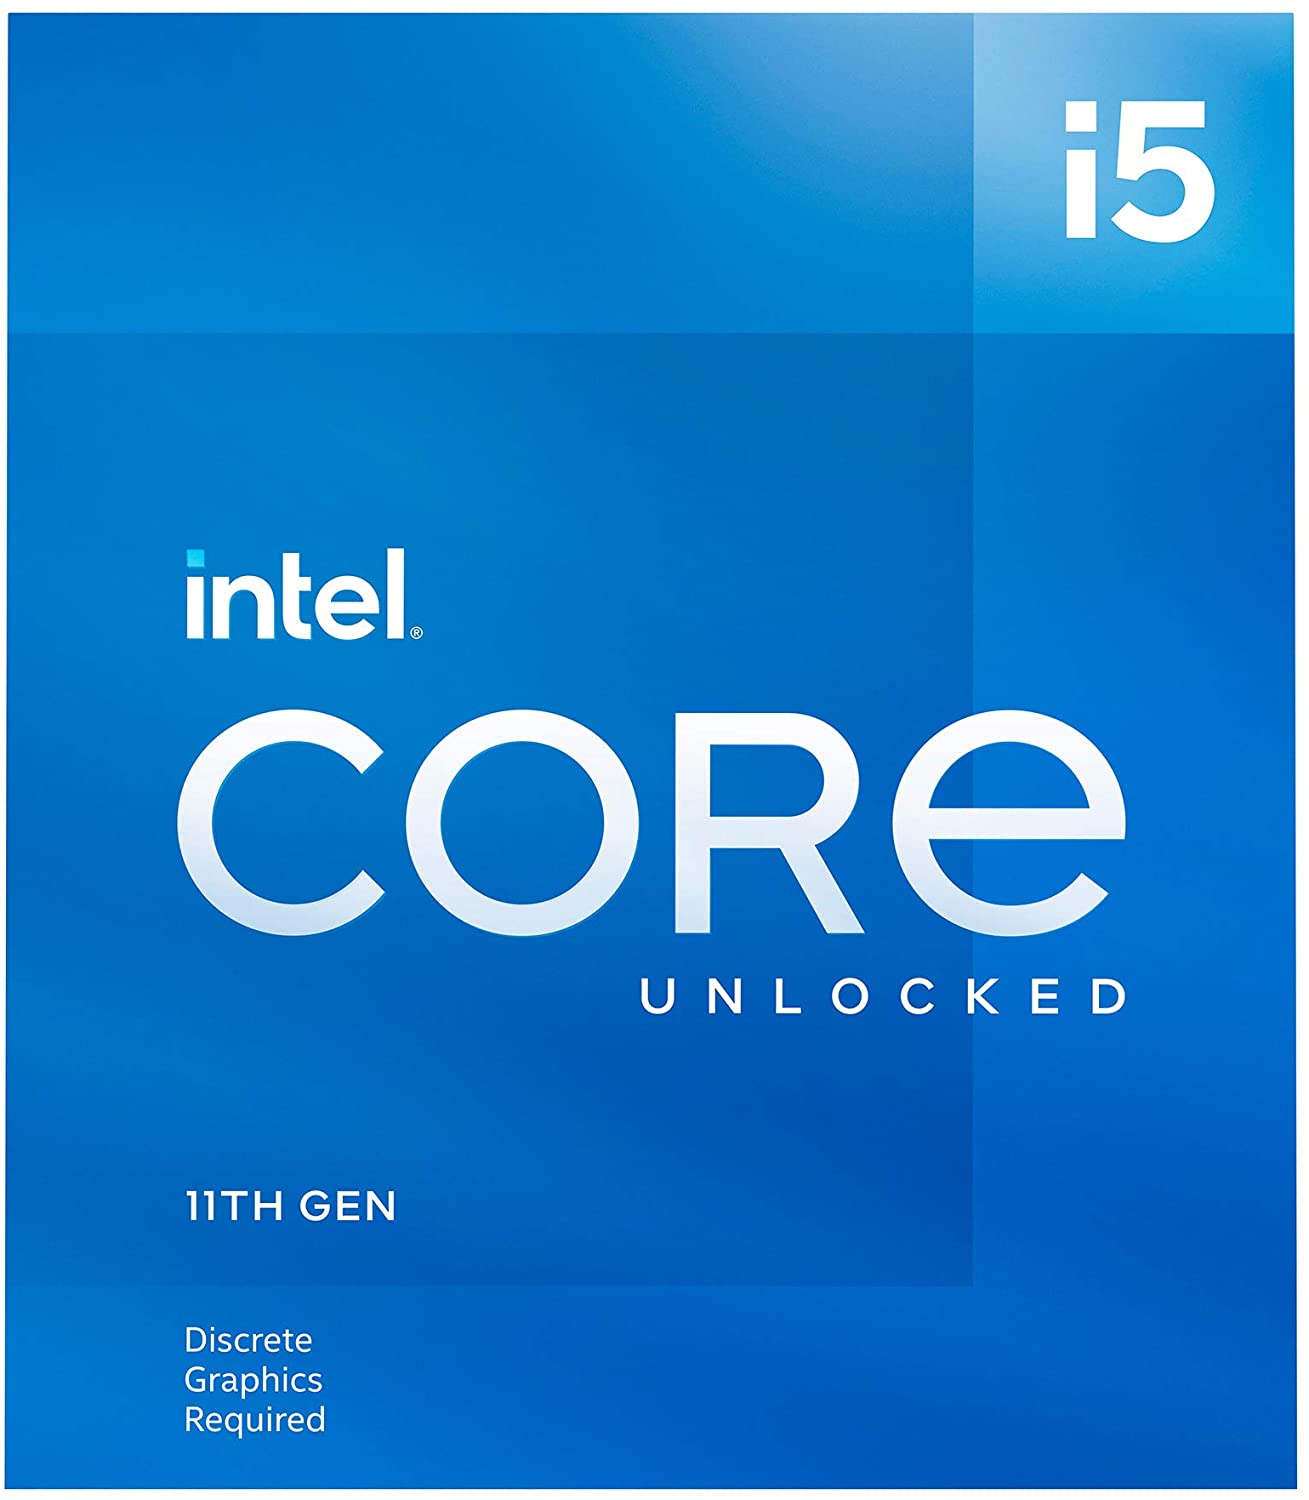 Intel® Core™ i5-11600KF Desktop Processor 6 Cores up to 4.9 GHz Unlocked LGA1200 (Intel® 500 Series & Select 400 Series Chipset) 125W